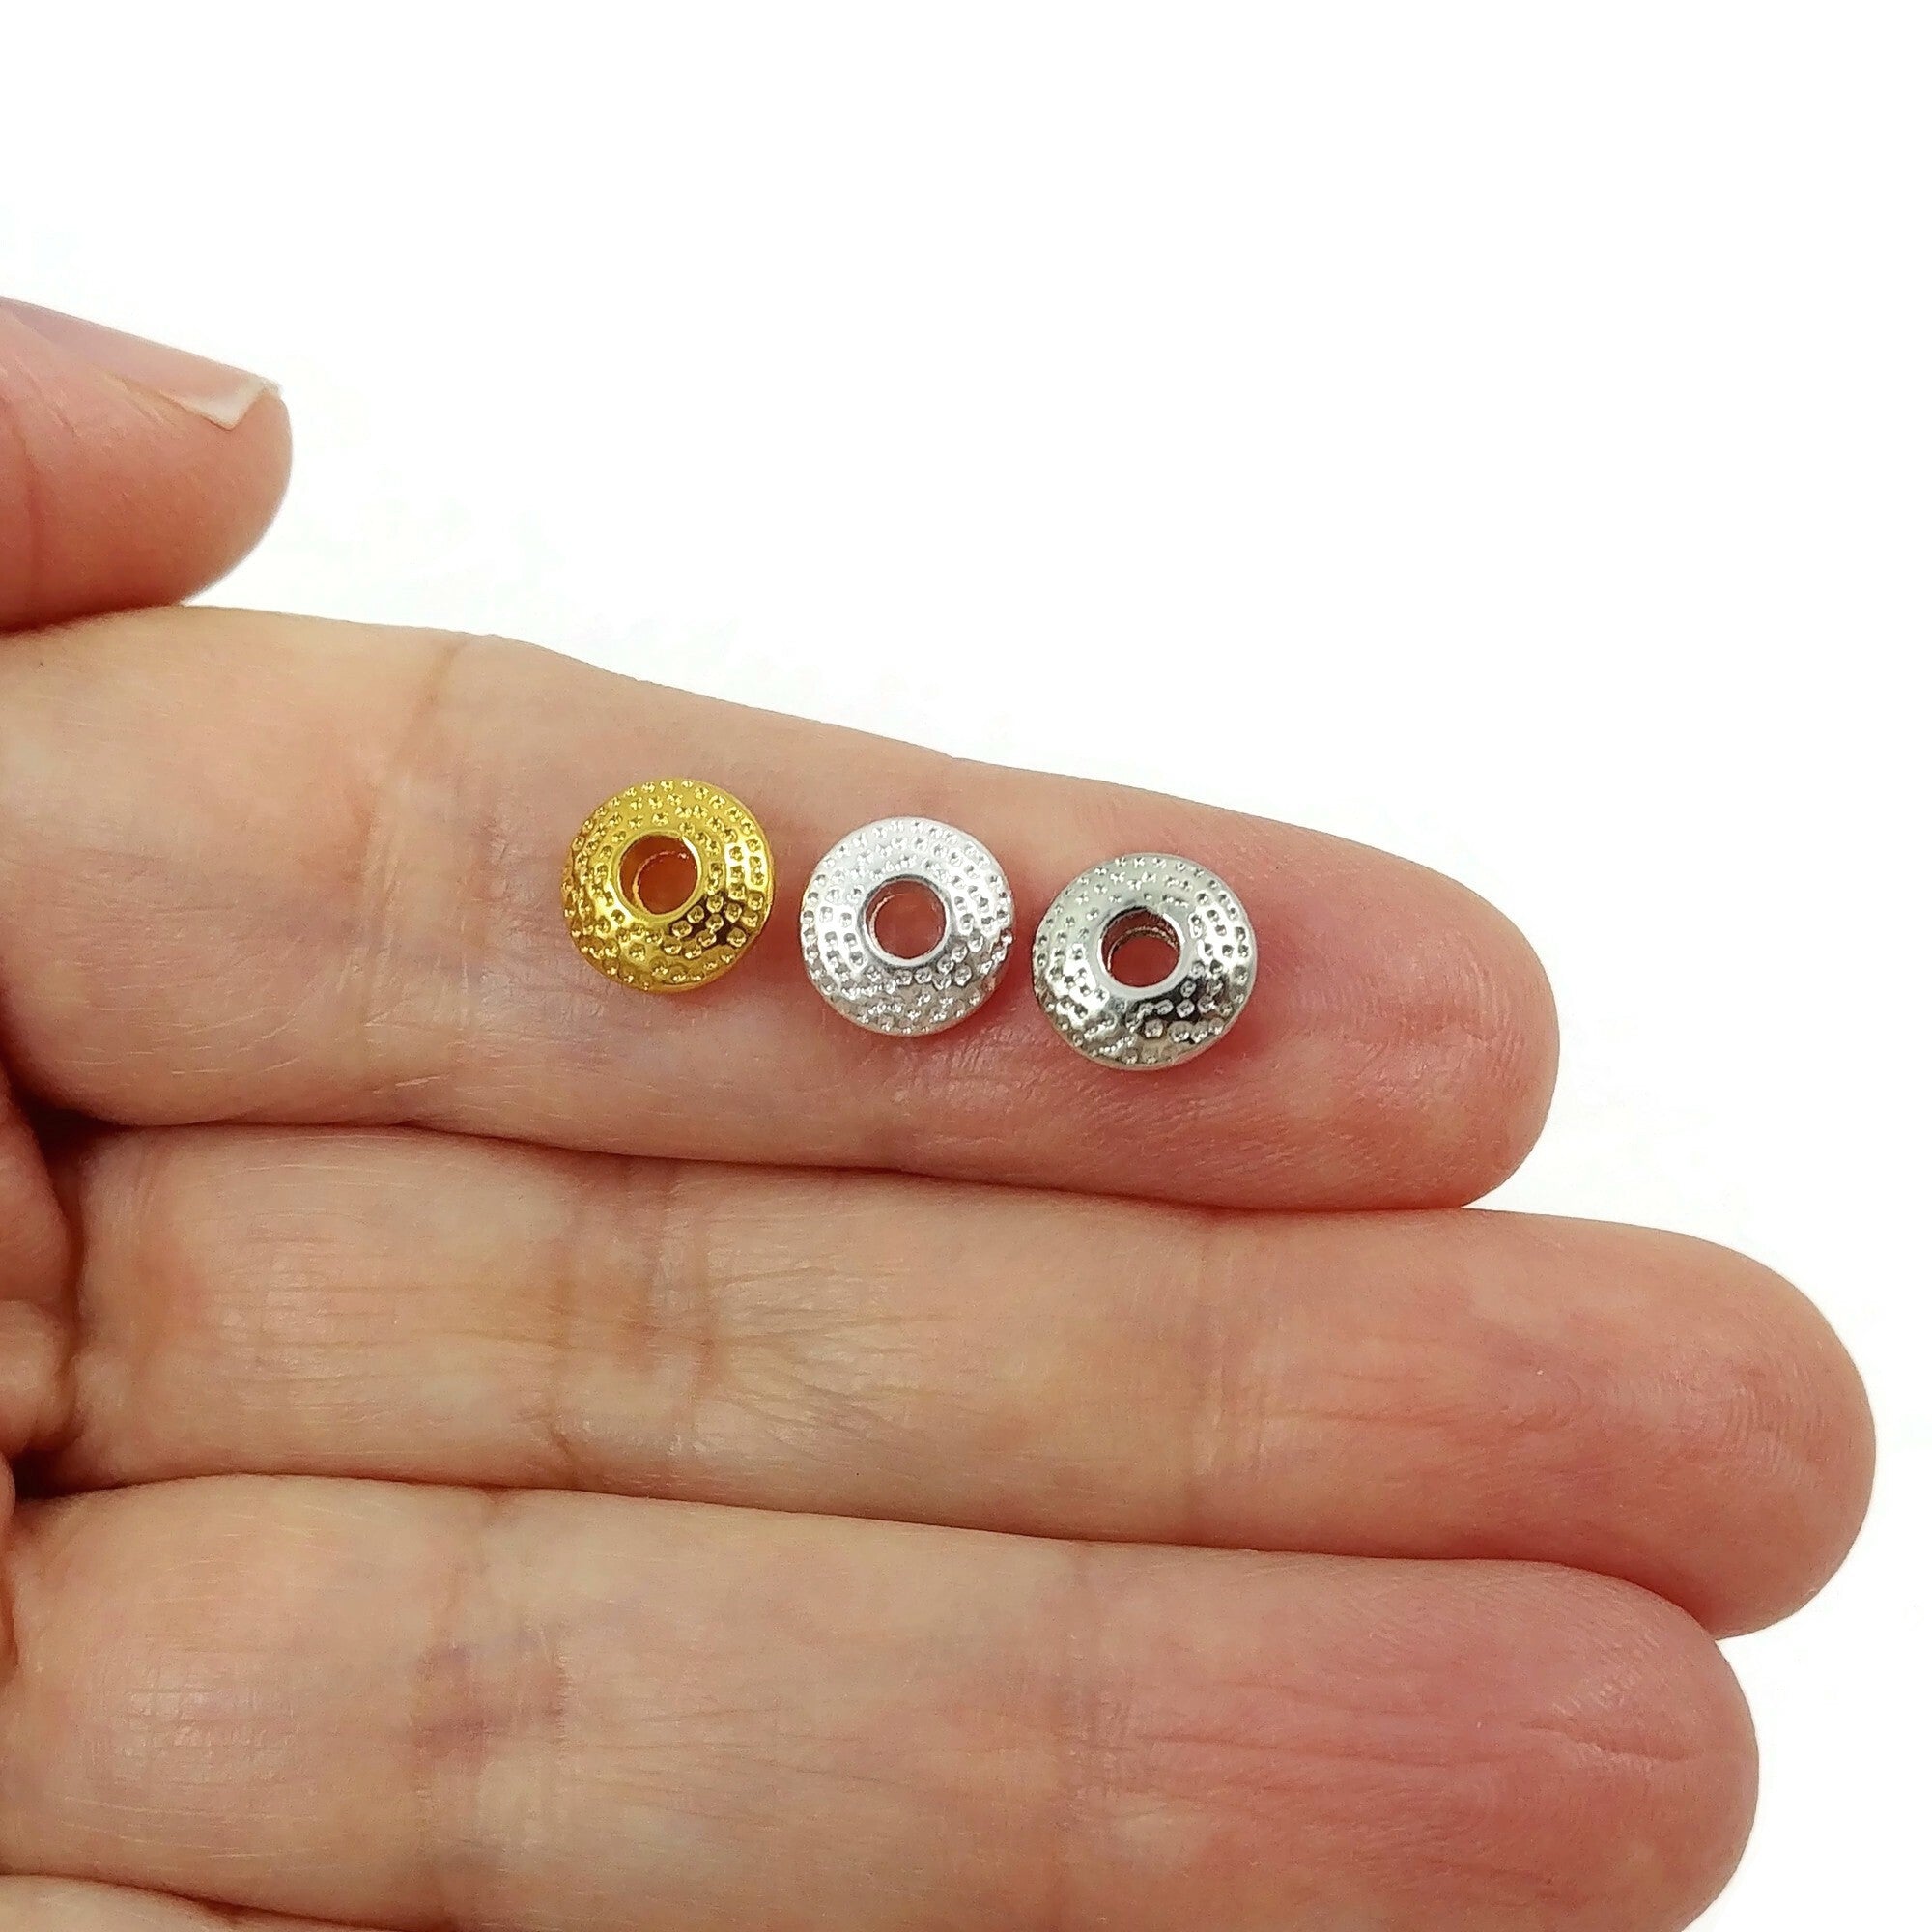 Tibetan rondelle beads 8mm - Nickel free, lead free and cadmium free